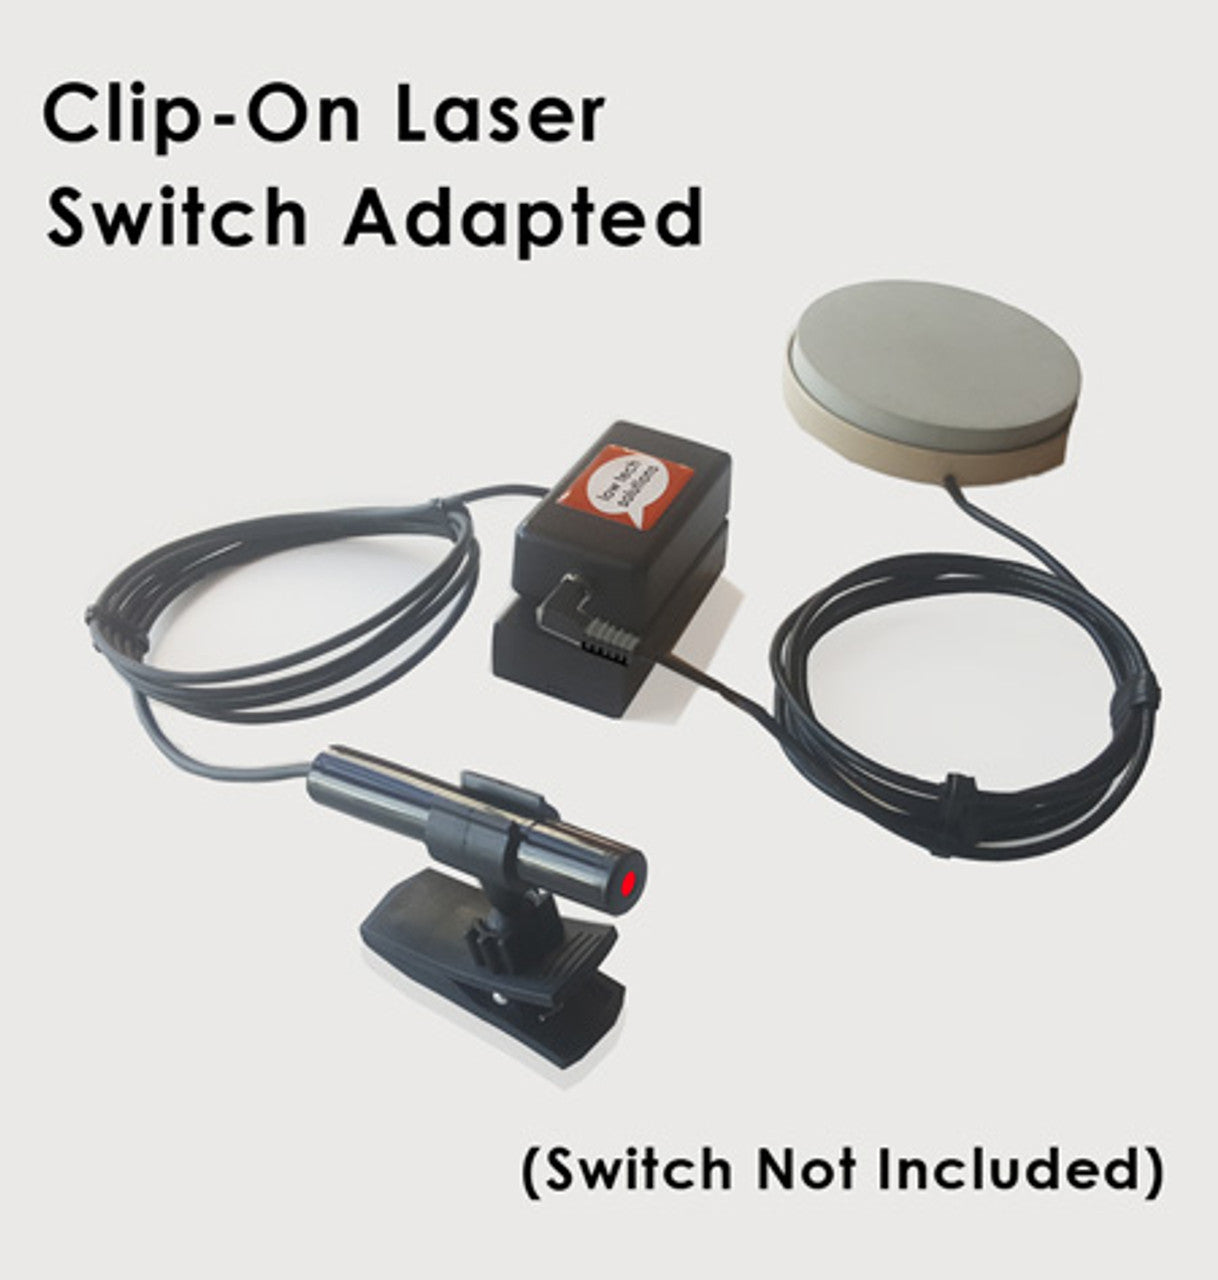 LaserWriter (Clip-On)